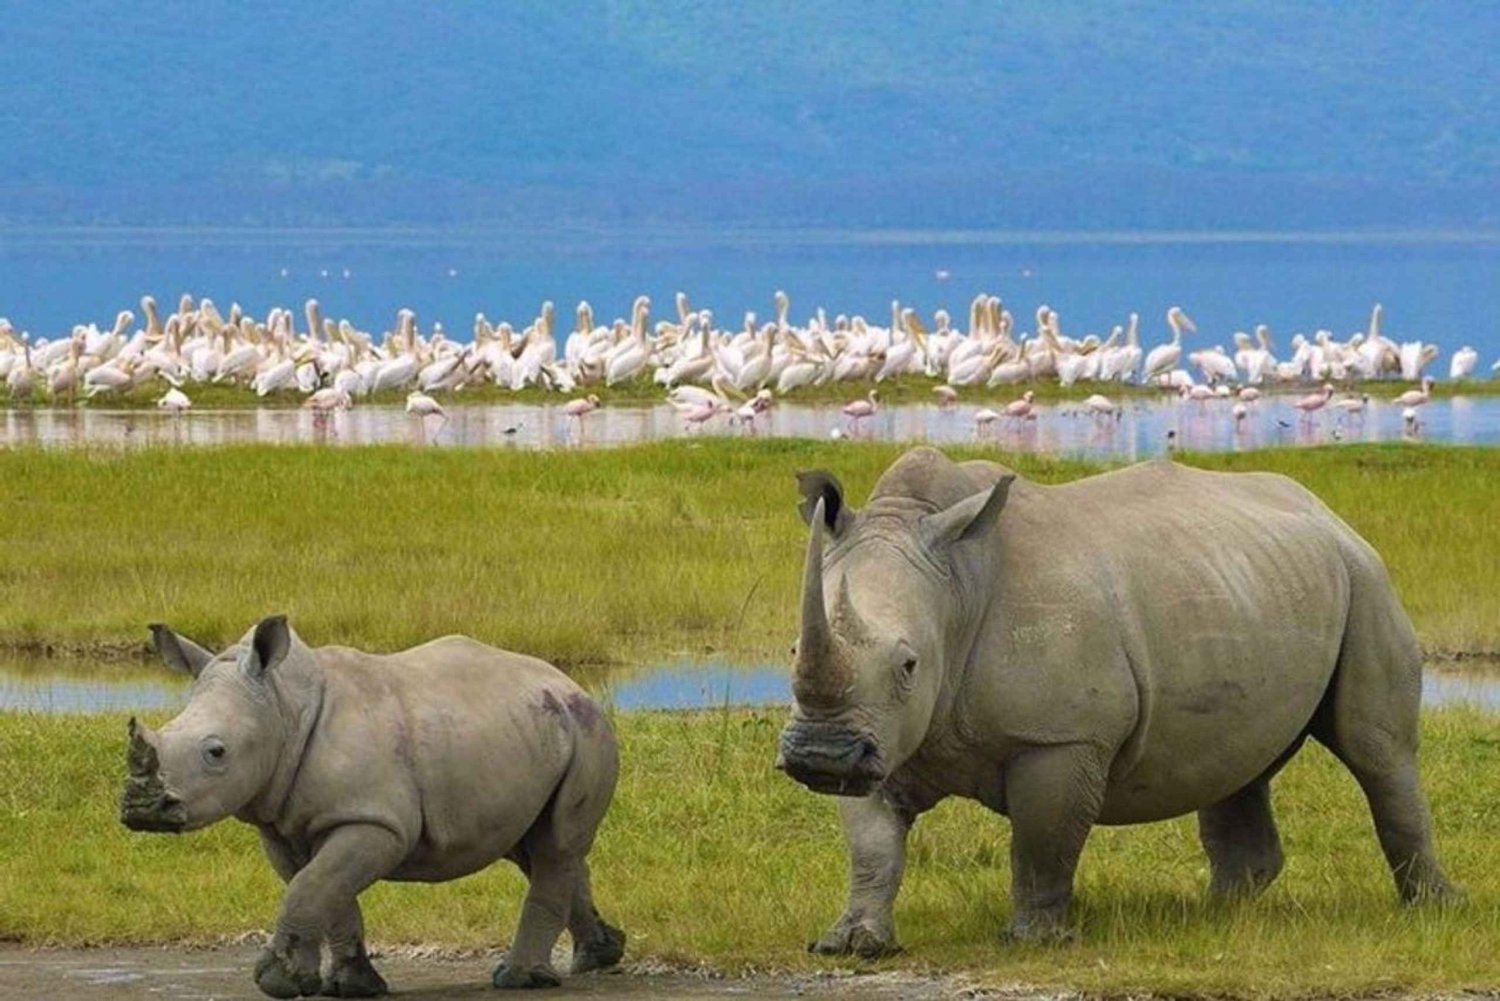 Nairobi: Nakuru National Park og Lake Naivasha dagstur